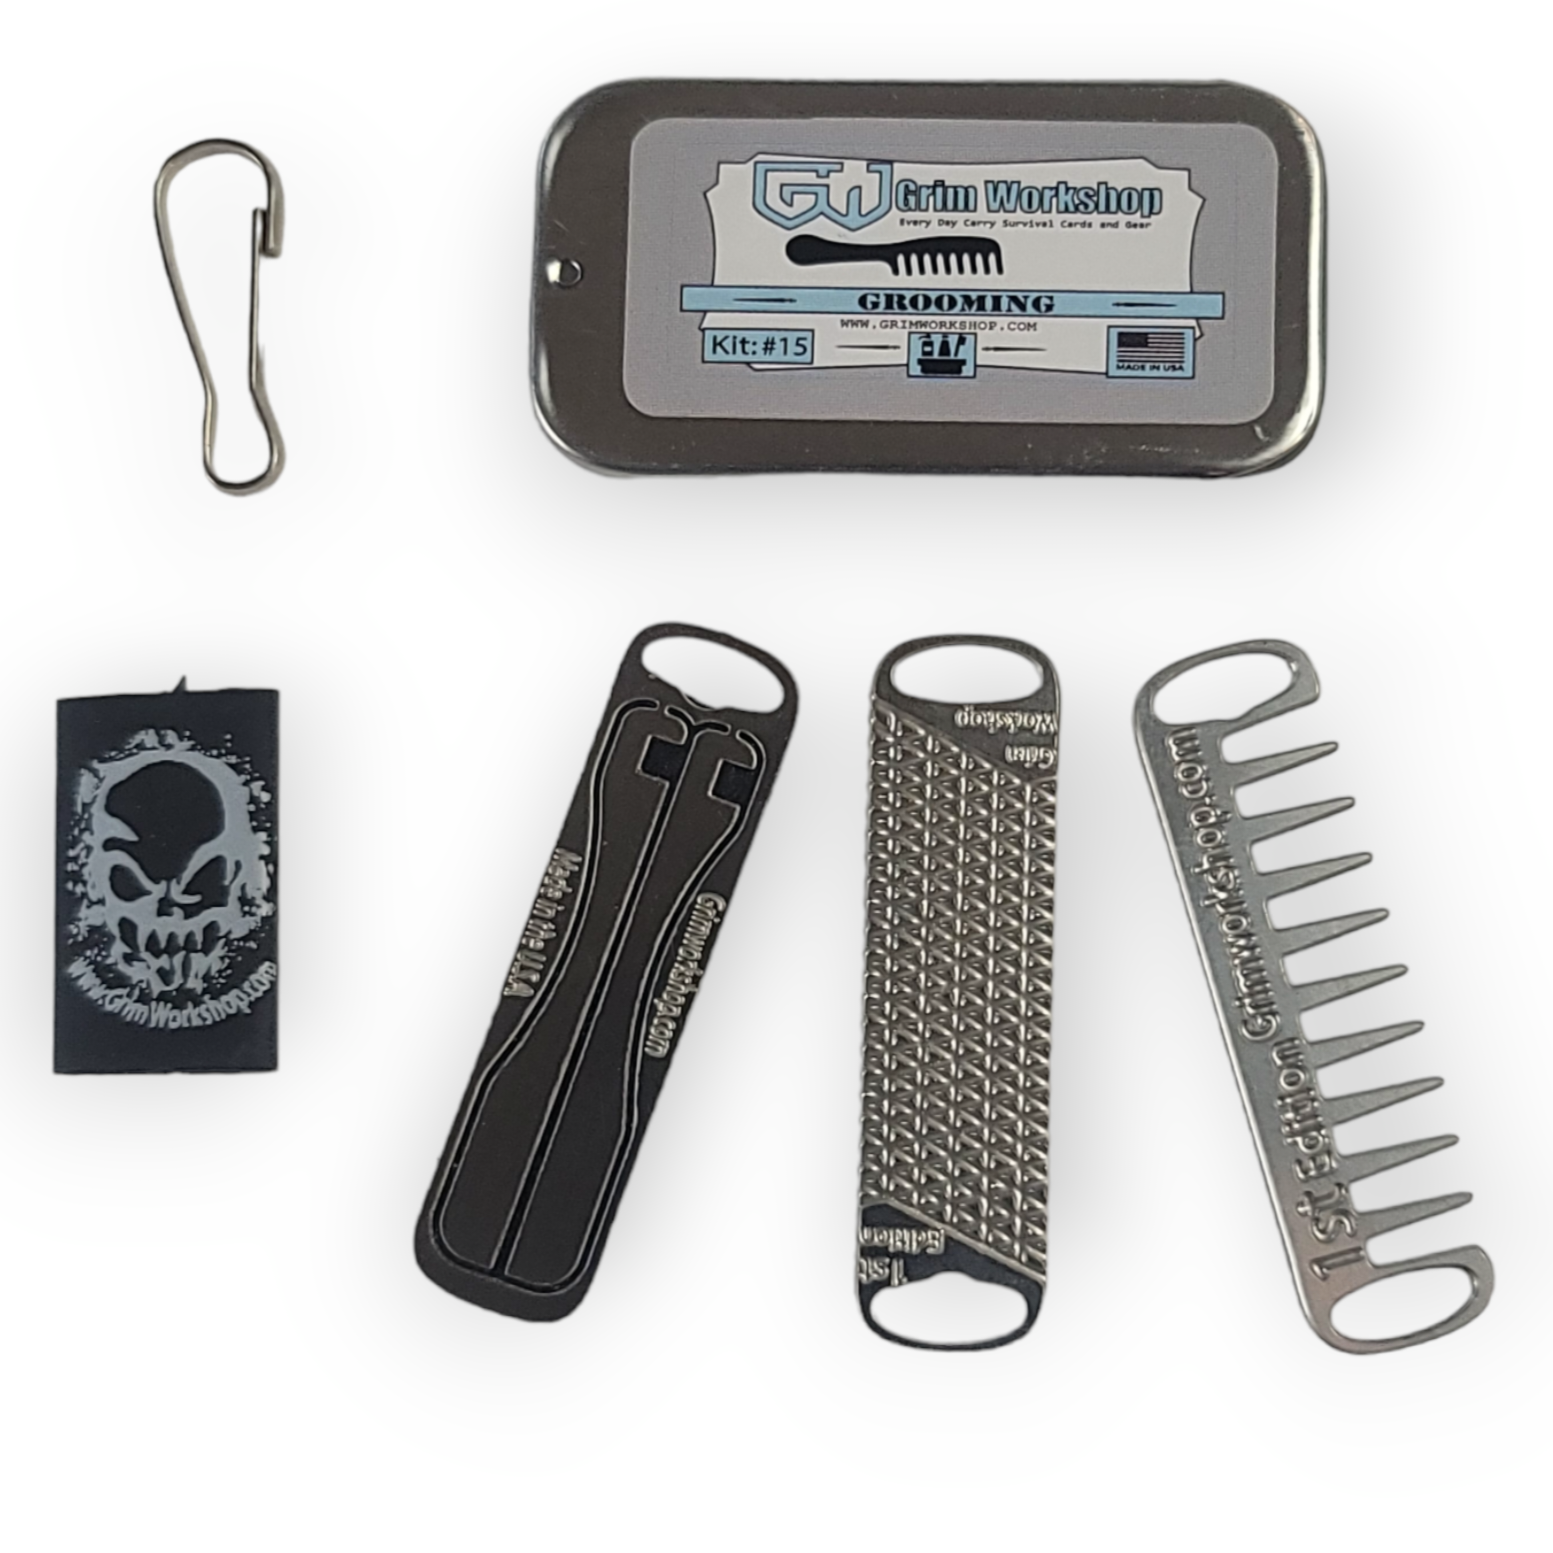 micro grooming kit, mustache grooming kit and mens travel grooming kit. 